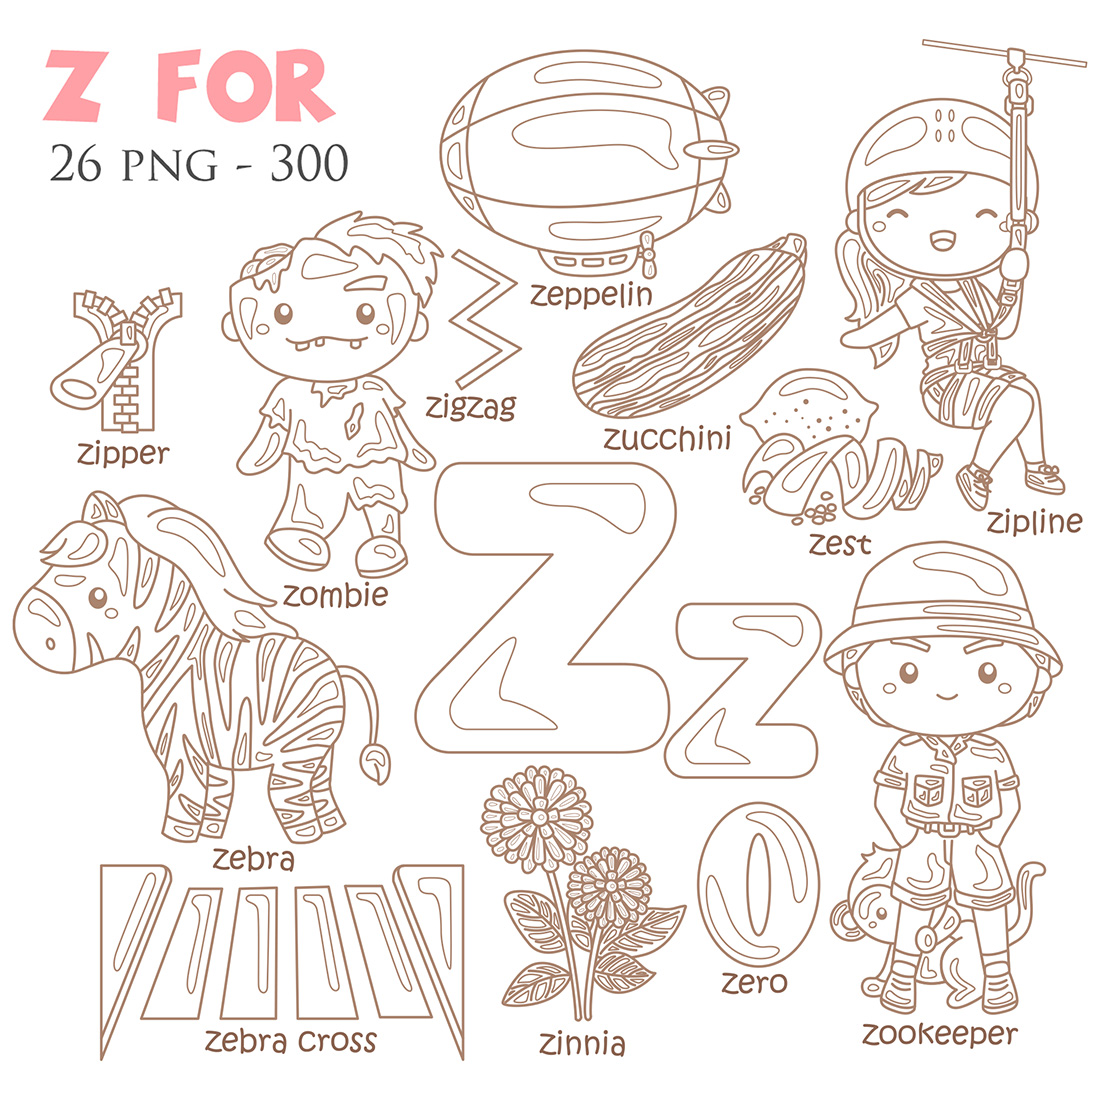 Alphabet z for vocabulary school letter reading writing font study learning student toodler kids lesson zebra